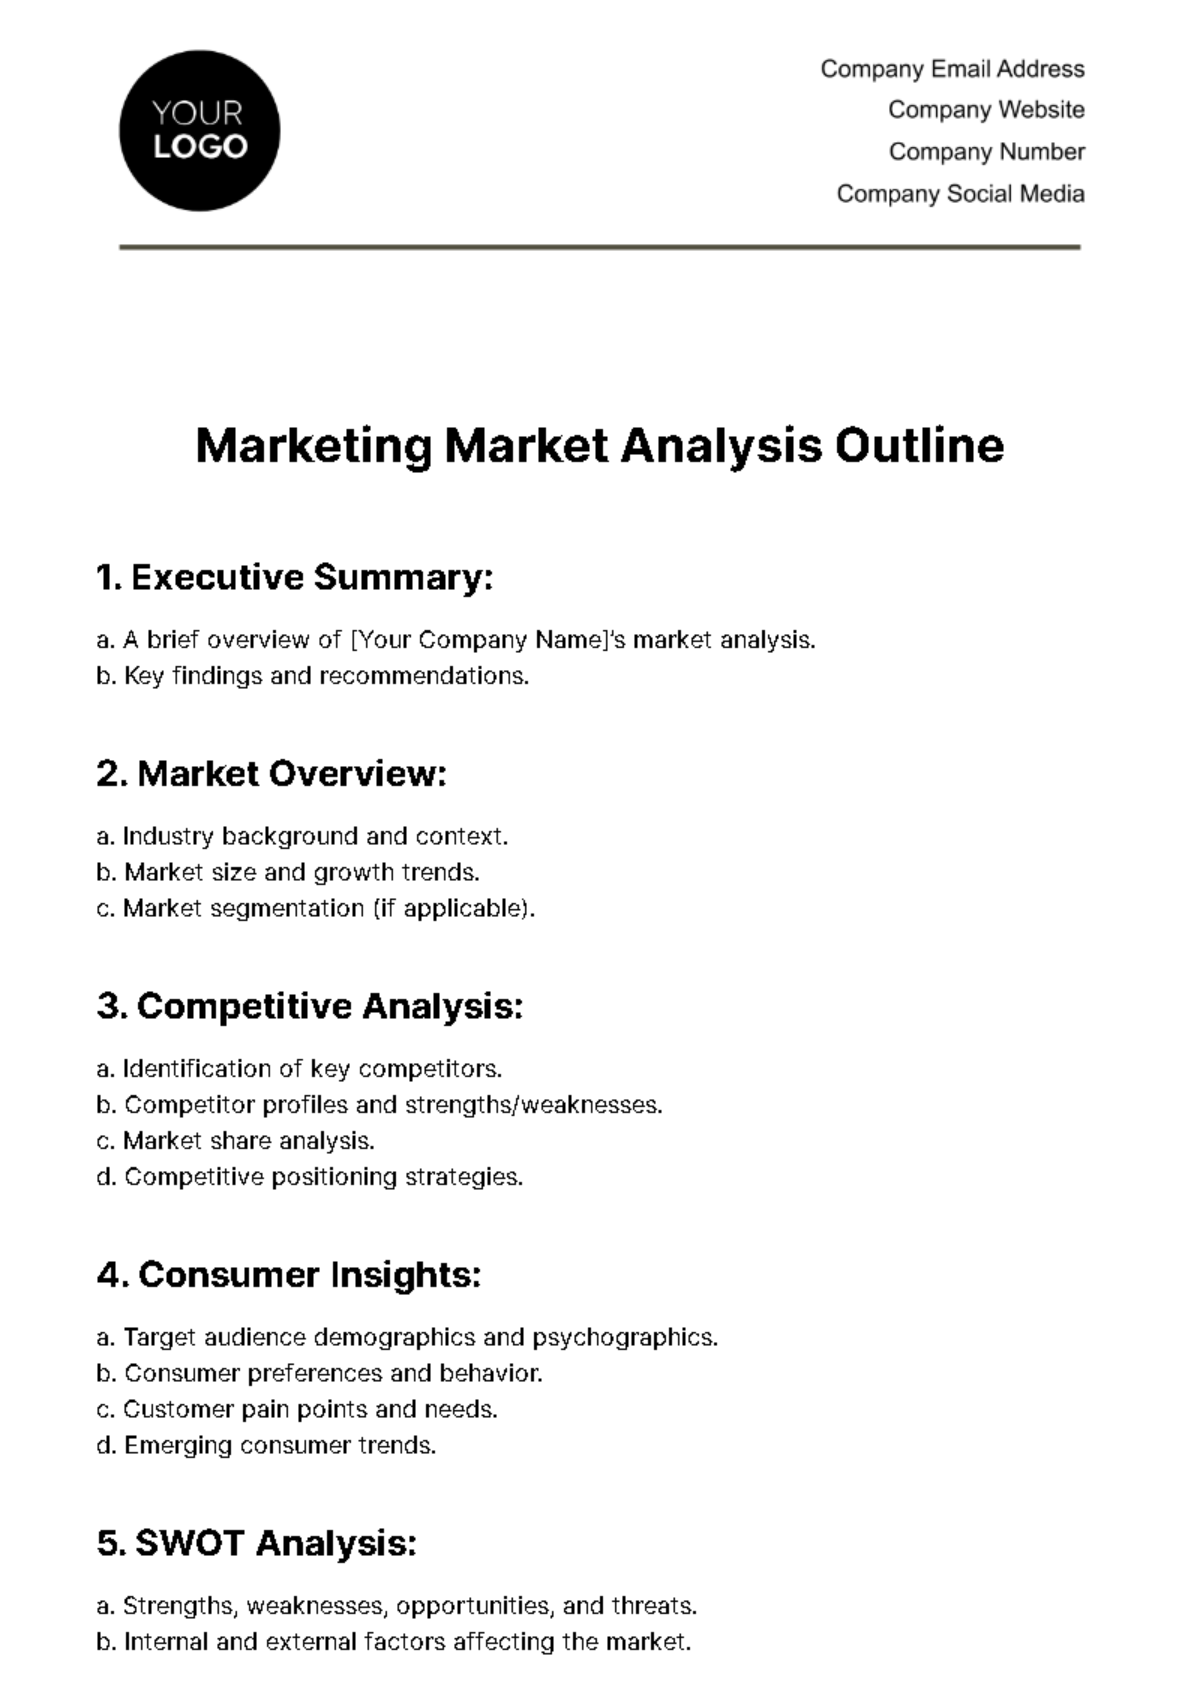 Marketing Market Analysis Outline Template